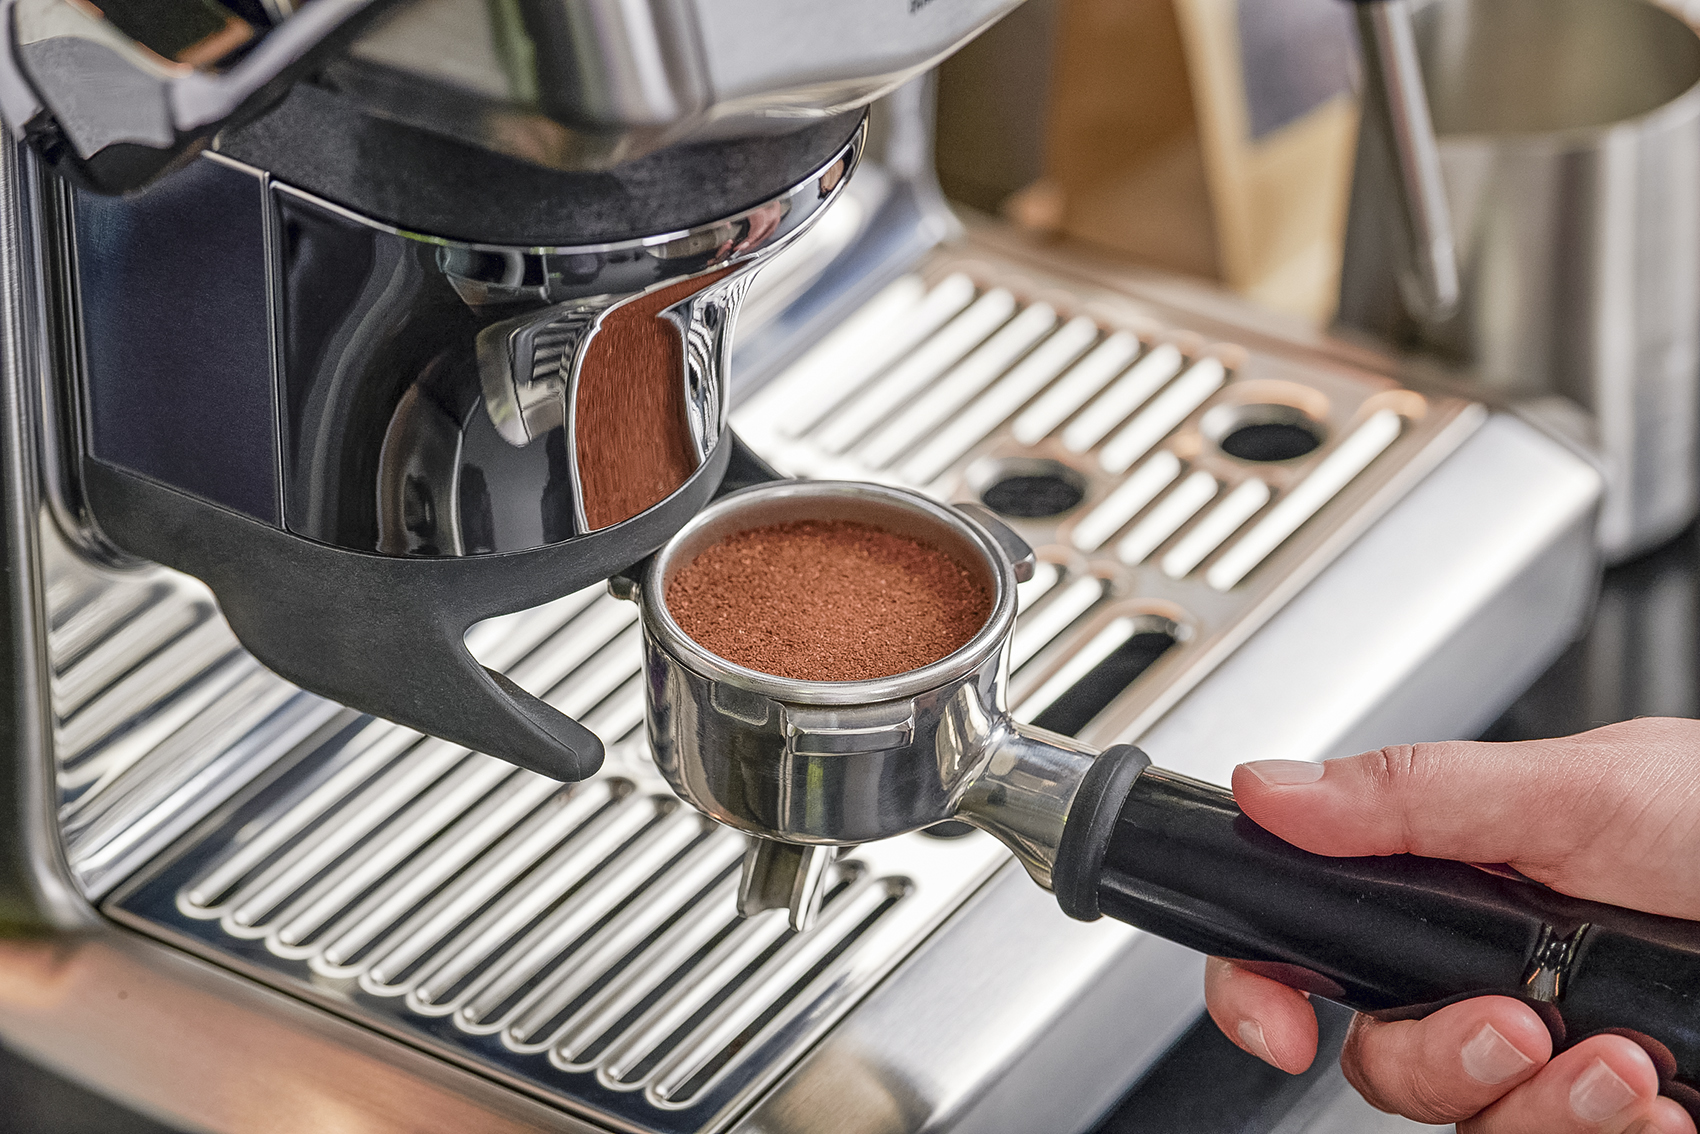 The Barista Express Impress, la cafetera inteligente que garantiza la dosis  exacta de café para el consumidor, TECNOLOGIA